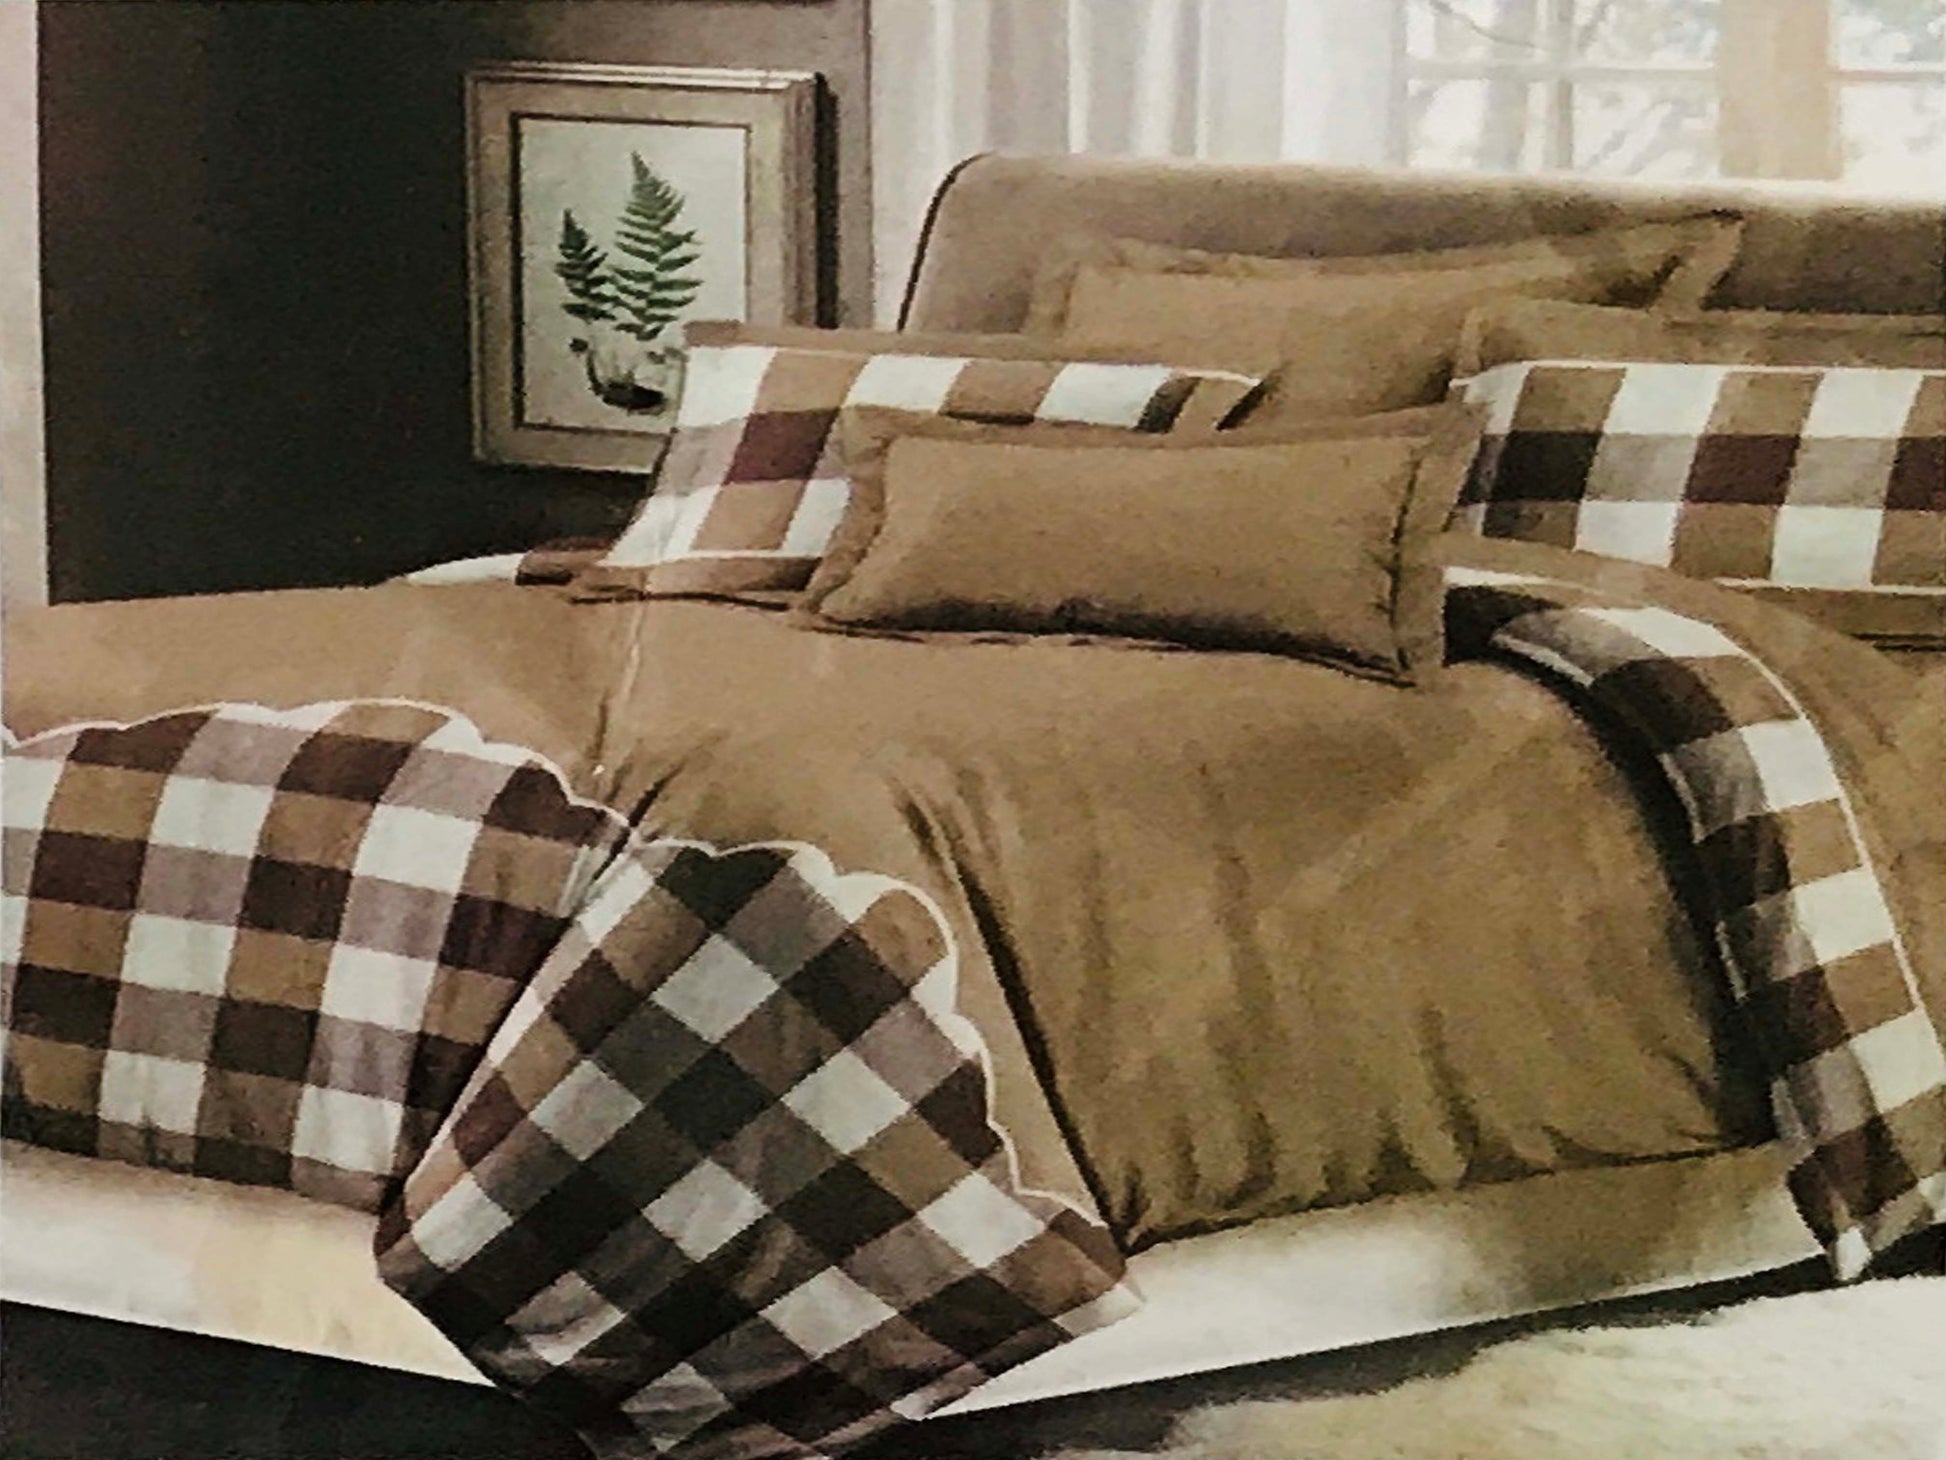 Quilted Bedspread Throw Comforter Bedding Sets Checks BEIGE